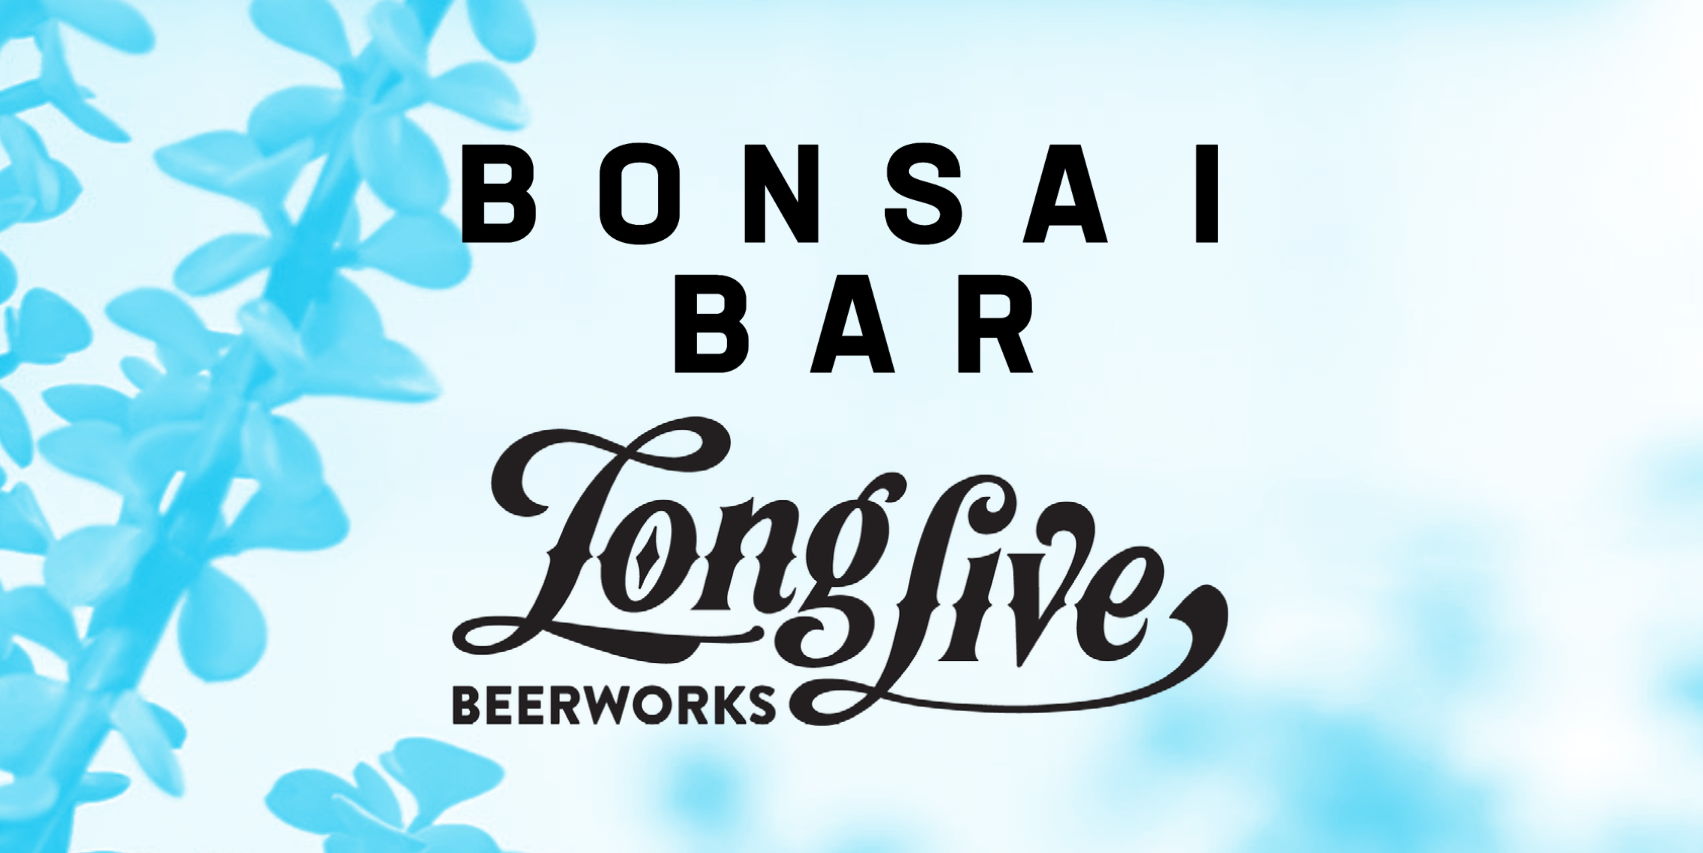 Bonsai Bar @ Long Live Beerworks promotional image